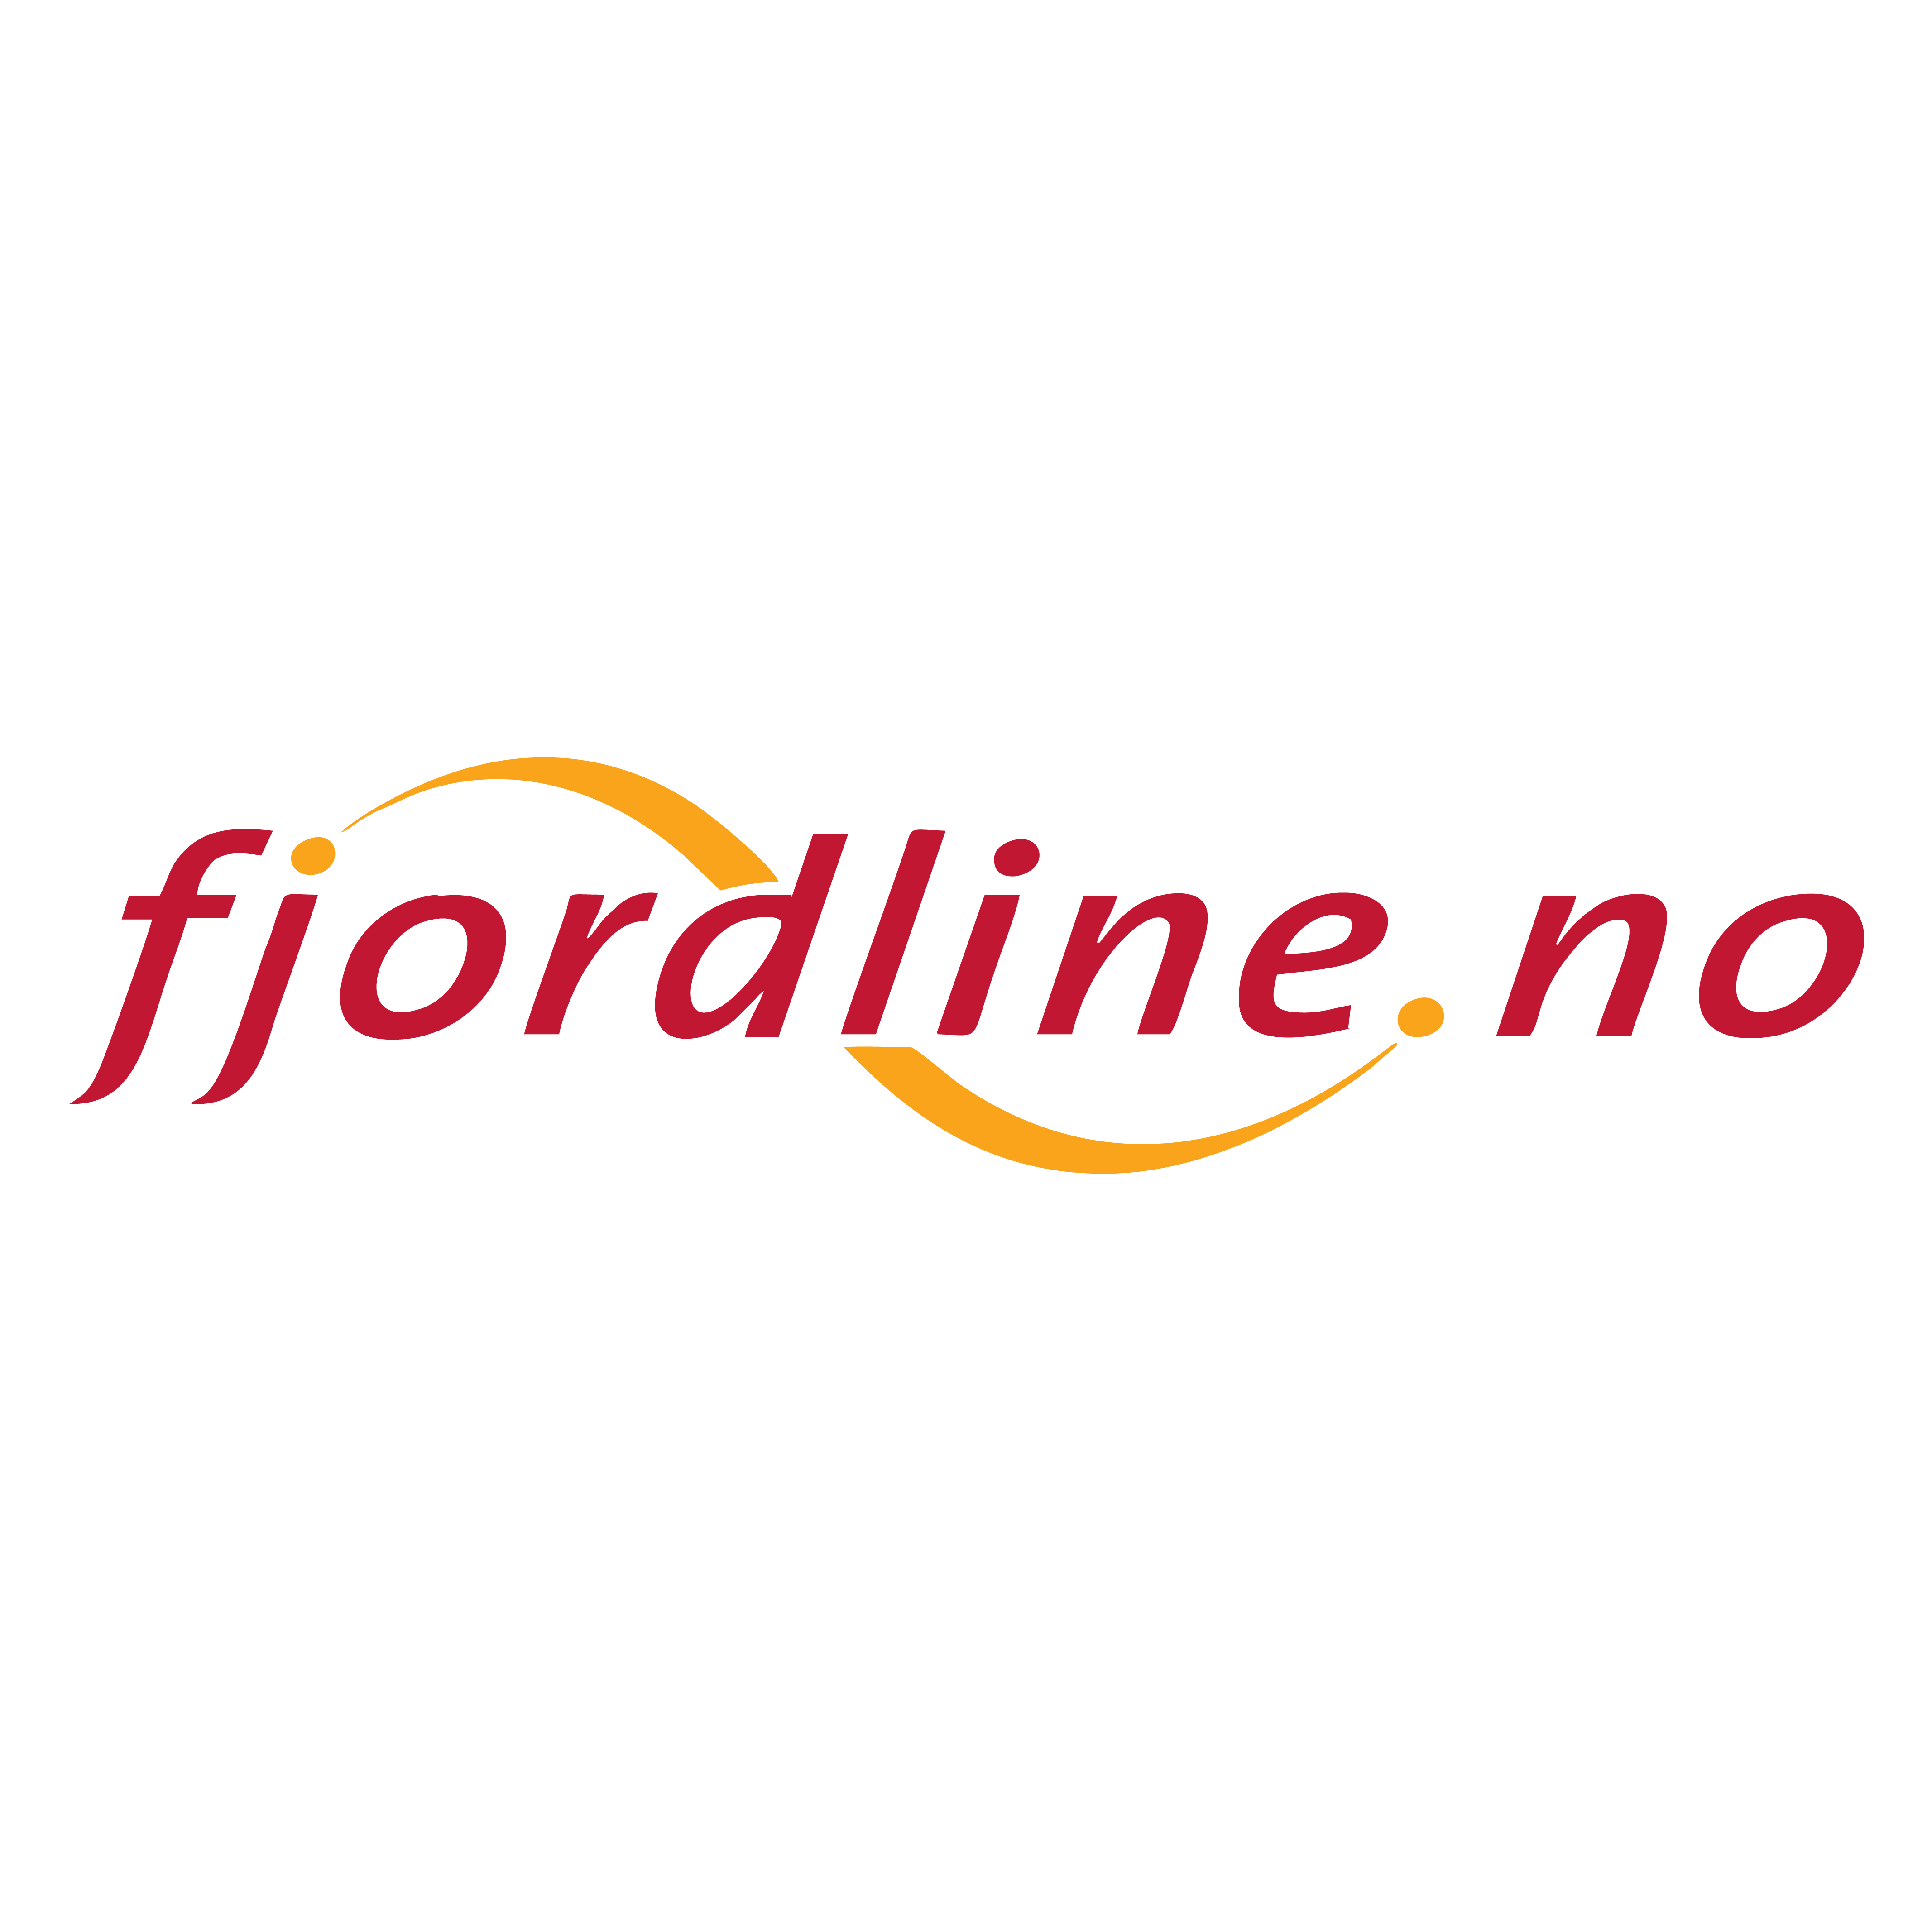 Fjordline logo